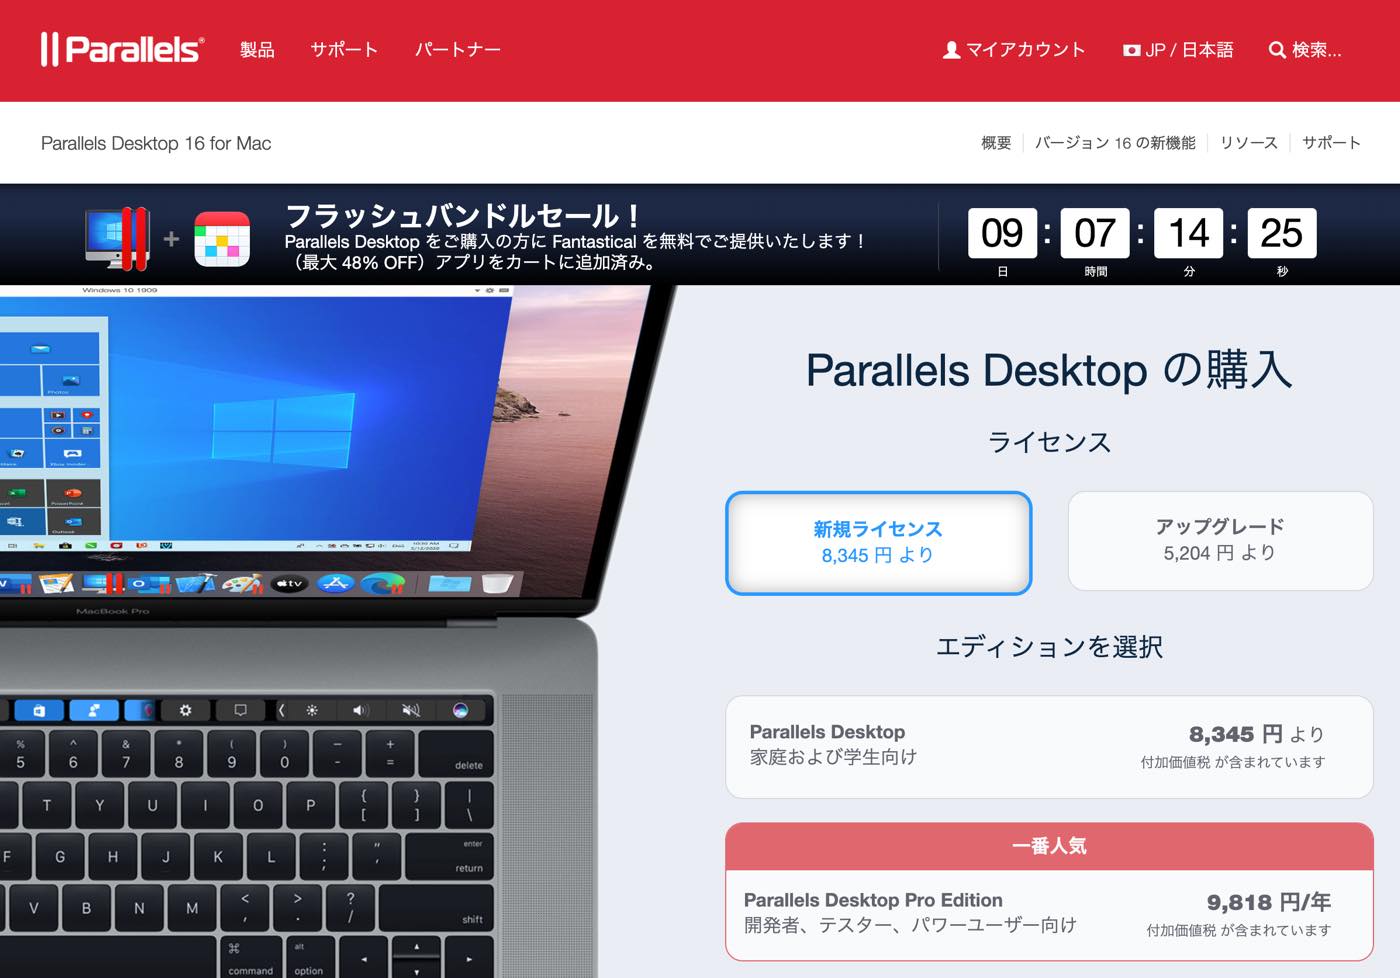 ｢Parallels Desktop 16 for Mac｣購入で人気カレンダーアプリ｢Fantastical｣が1年間無料になるキャンペーン実施中